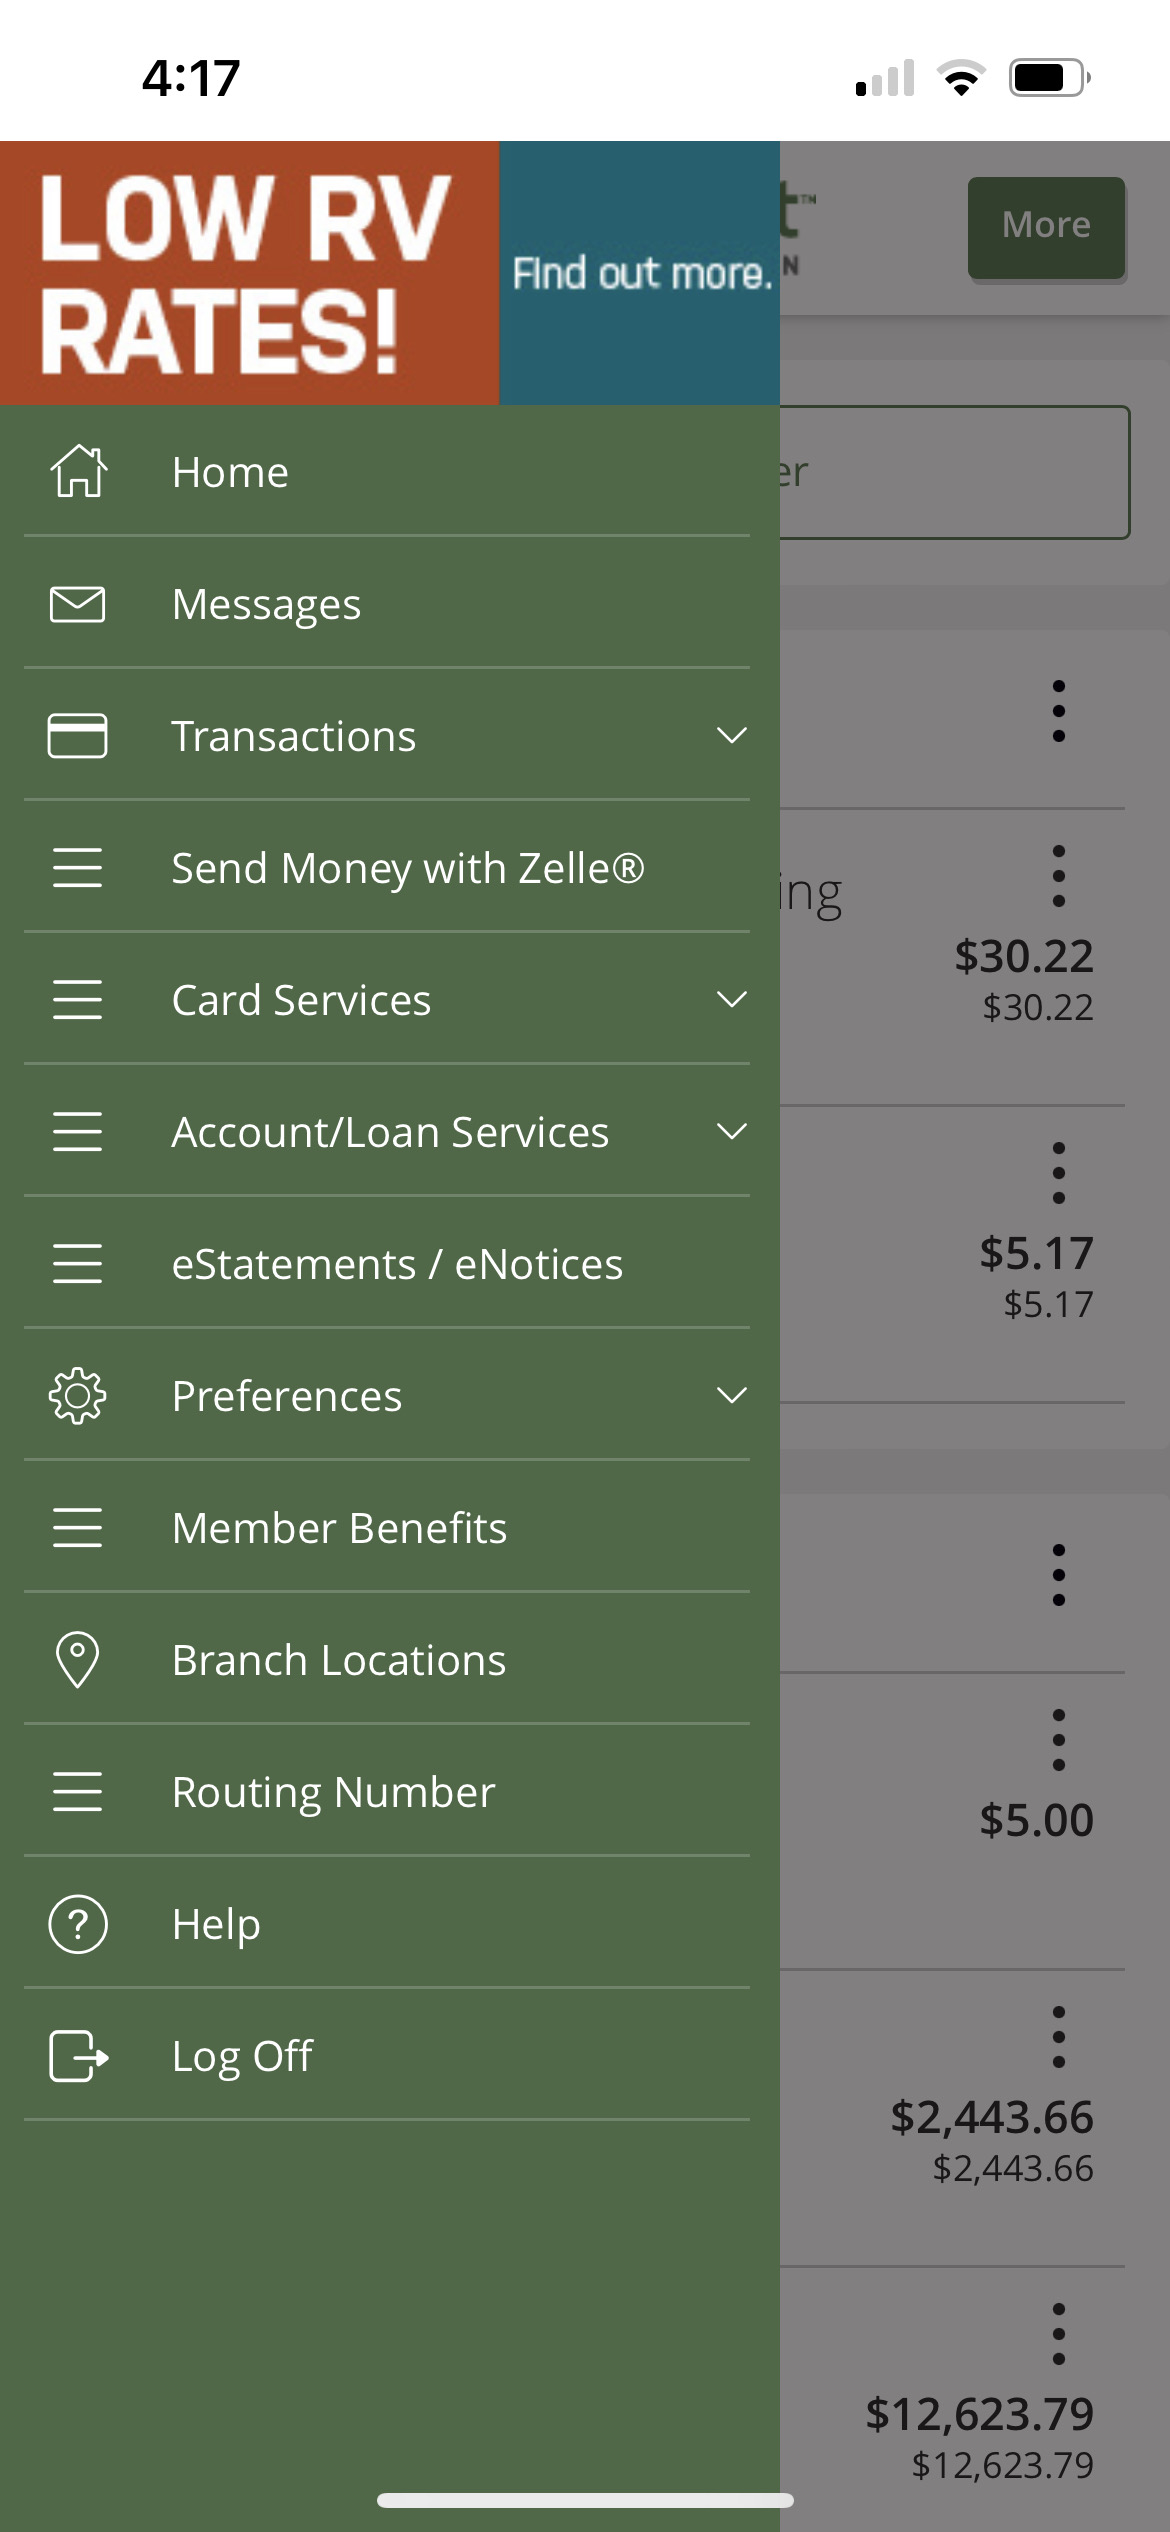 Member Benefits Access from eBanking app